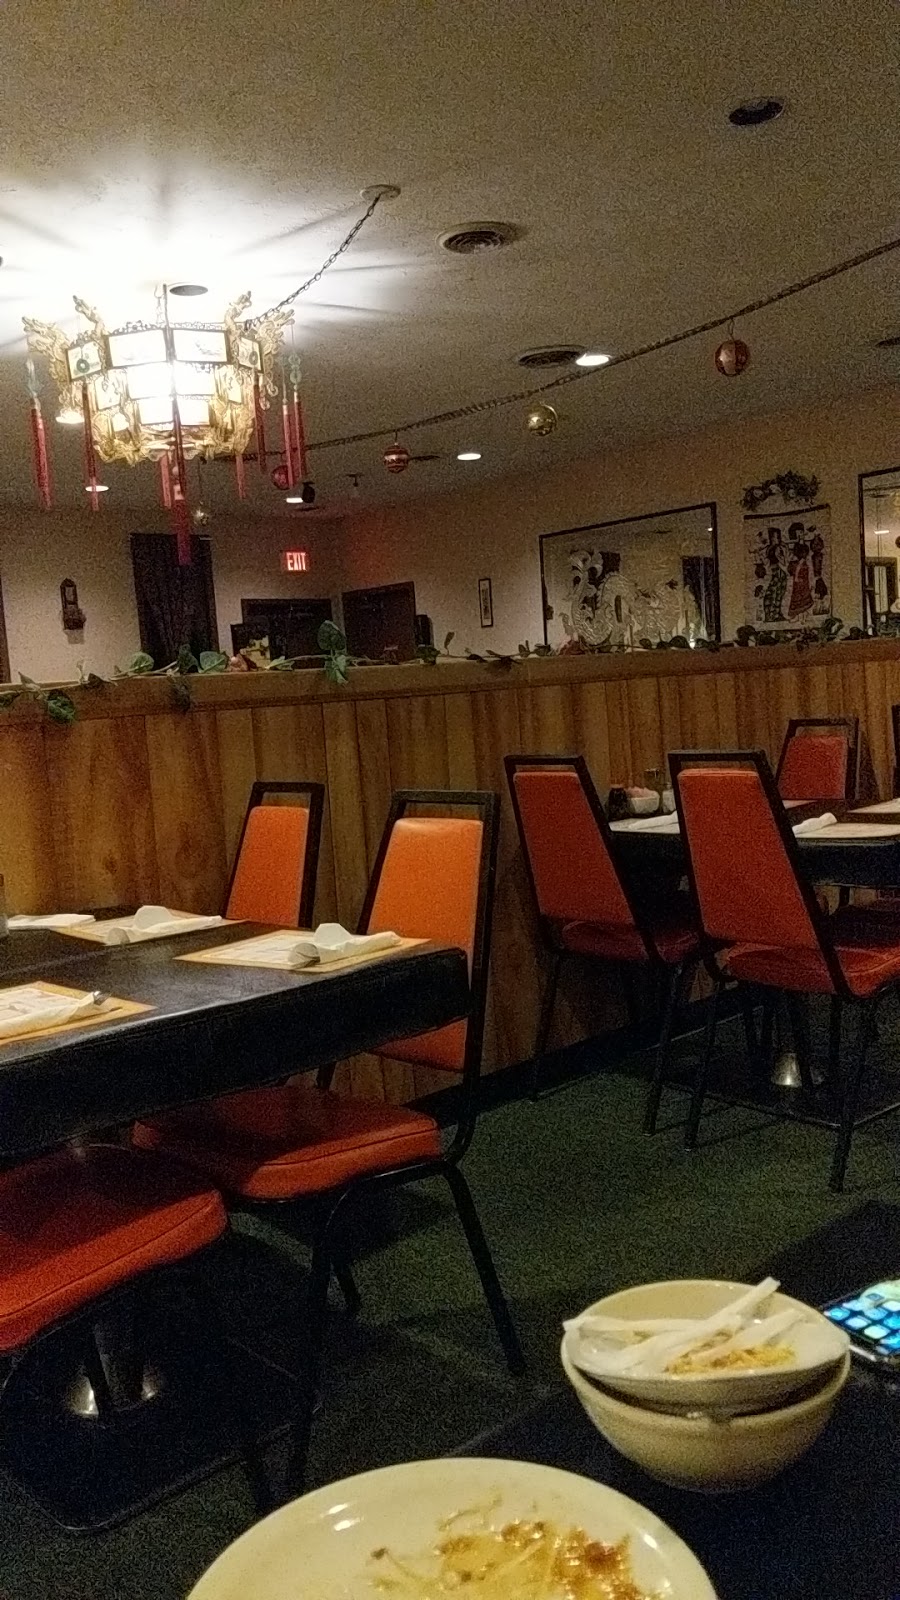 Bill Hwang Restaurant | 879 Canton Rd, Akron, OH 44312, USA | Phone: (330) 784-7167